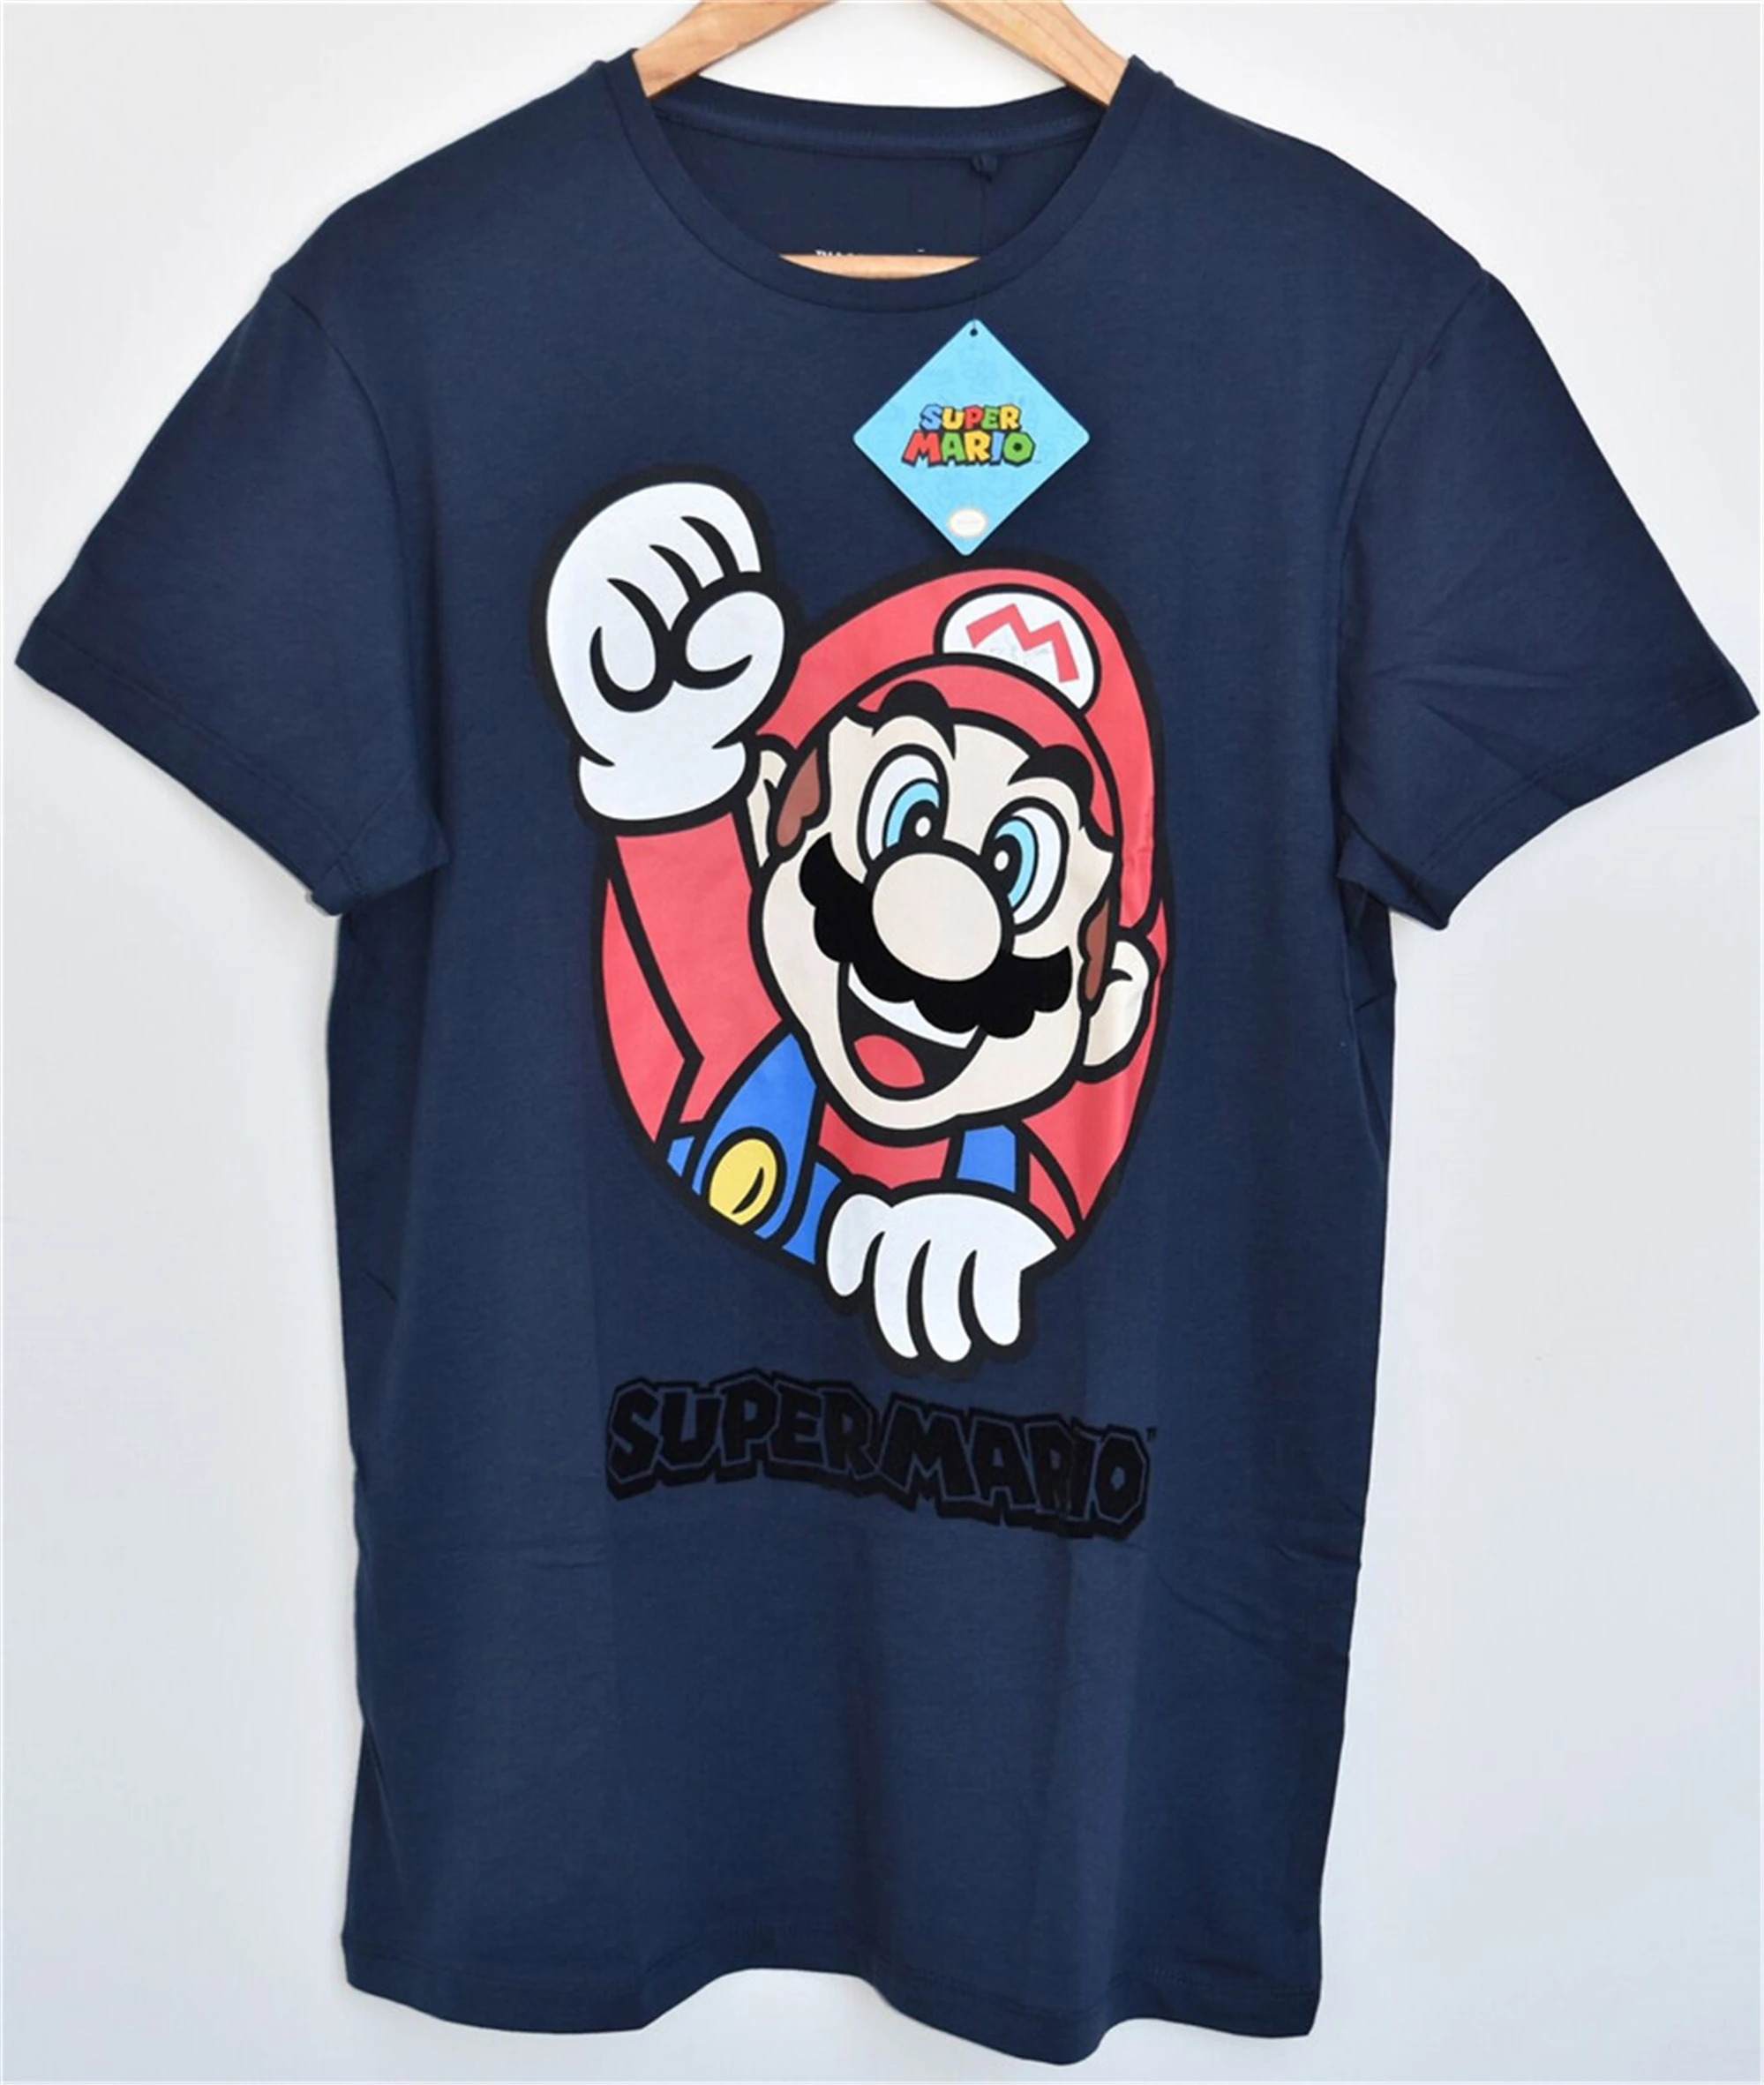 Dekan Withered vene Primark Super Mario T Shirt Men's Nintendo Gamer Navy Uk Sizes M Xxl Tops  Tee Shirt Street Wear Fashion|T-Shirts| - AliExpress